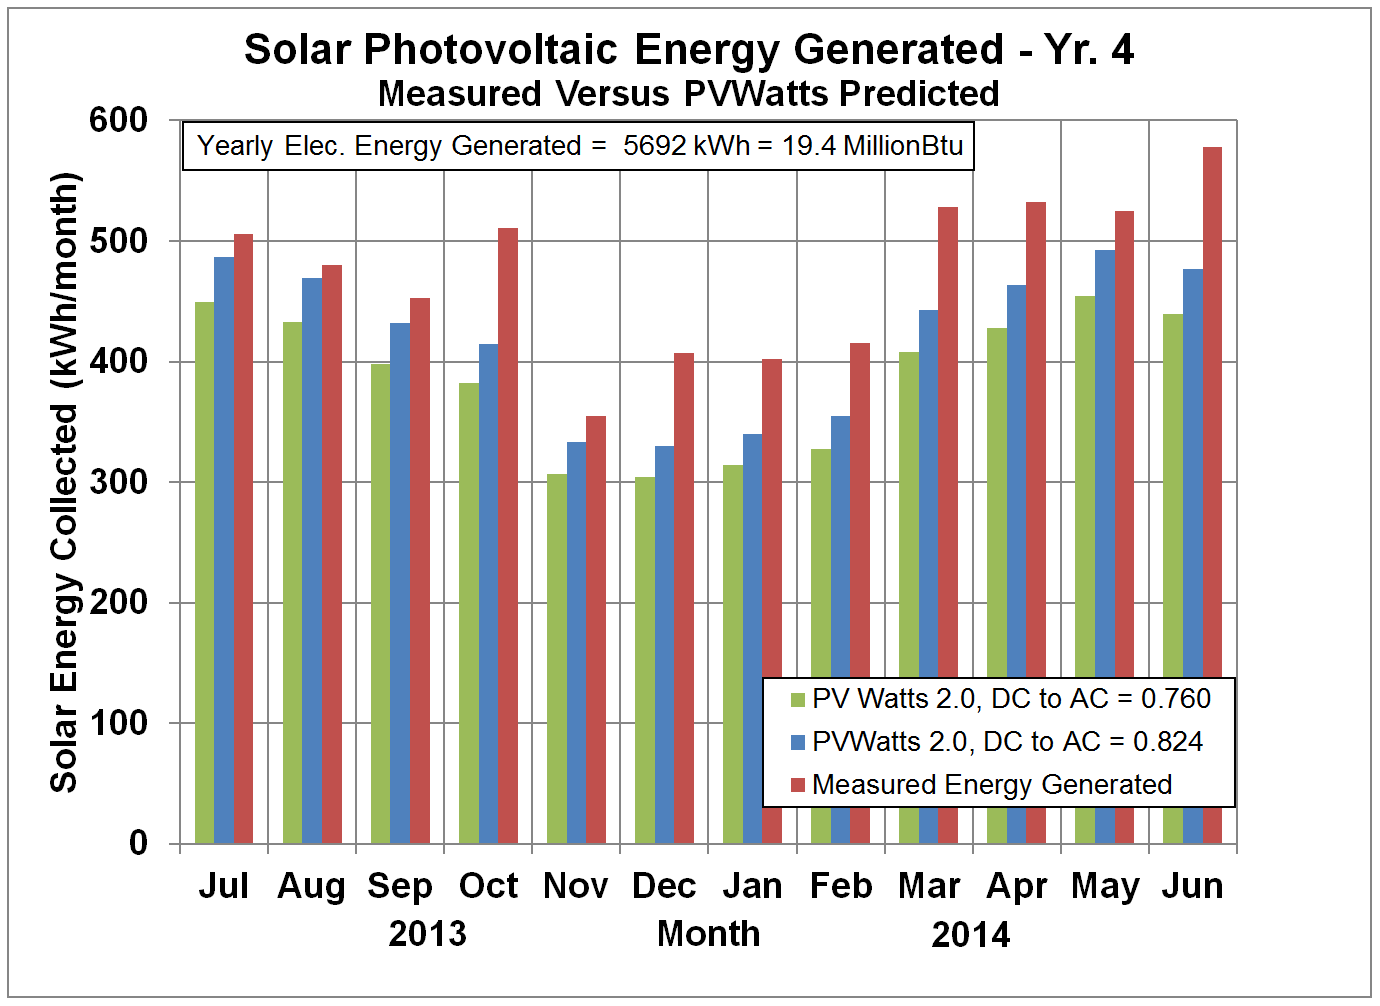 Solar PV Energy Predicted versus Generated - Yr. 4